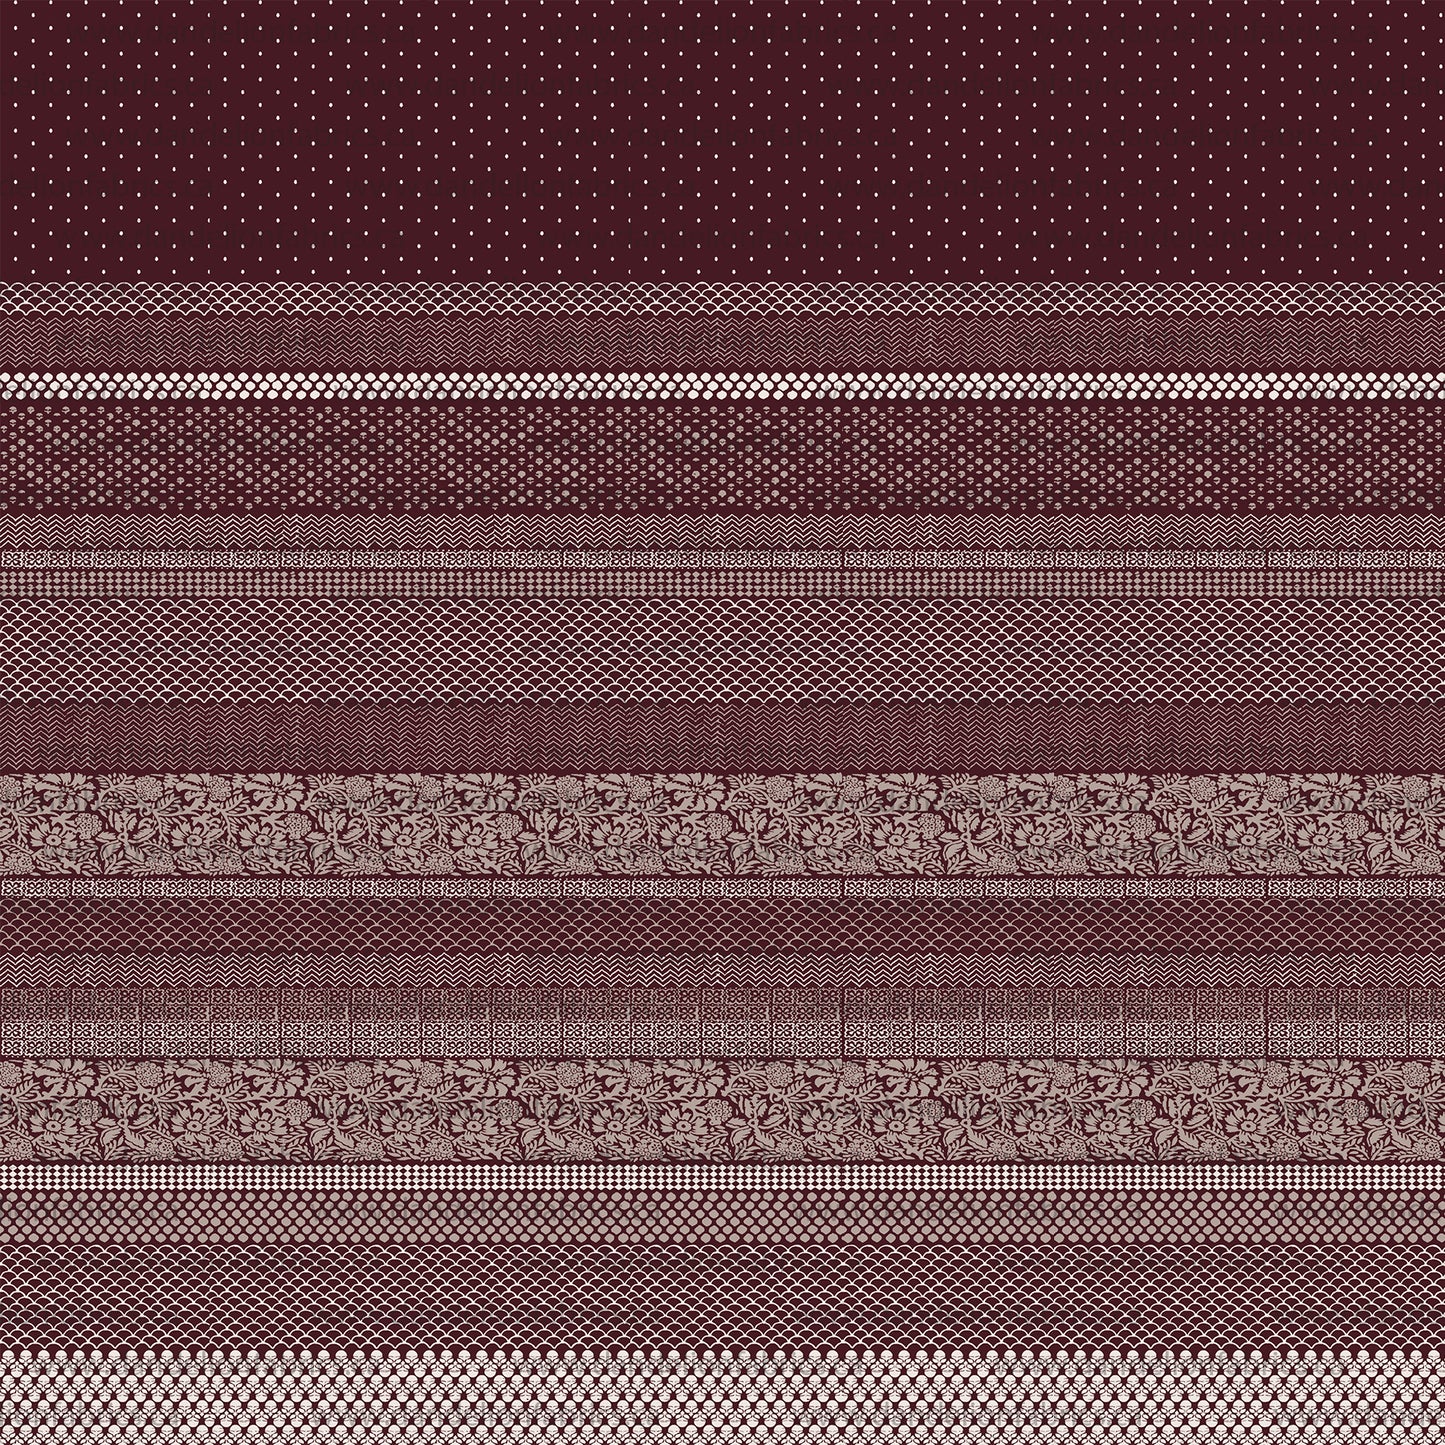 Bohemian Stripes in Burgundy | Unbrushed Rib Knit Fabric